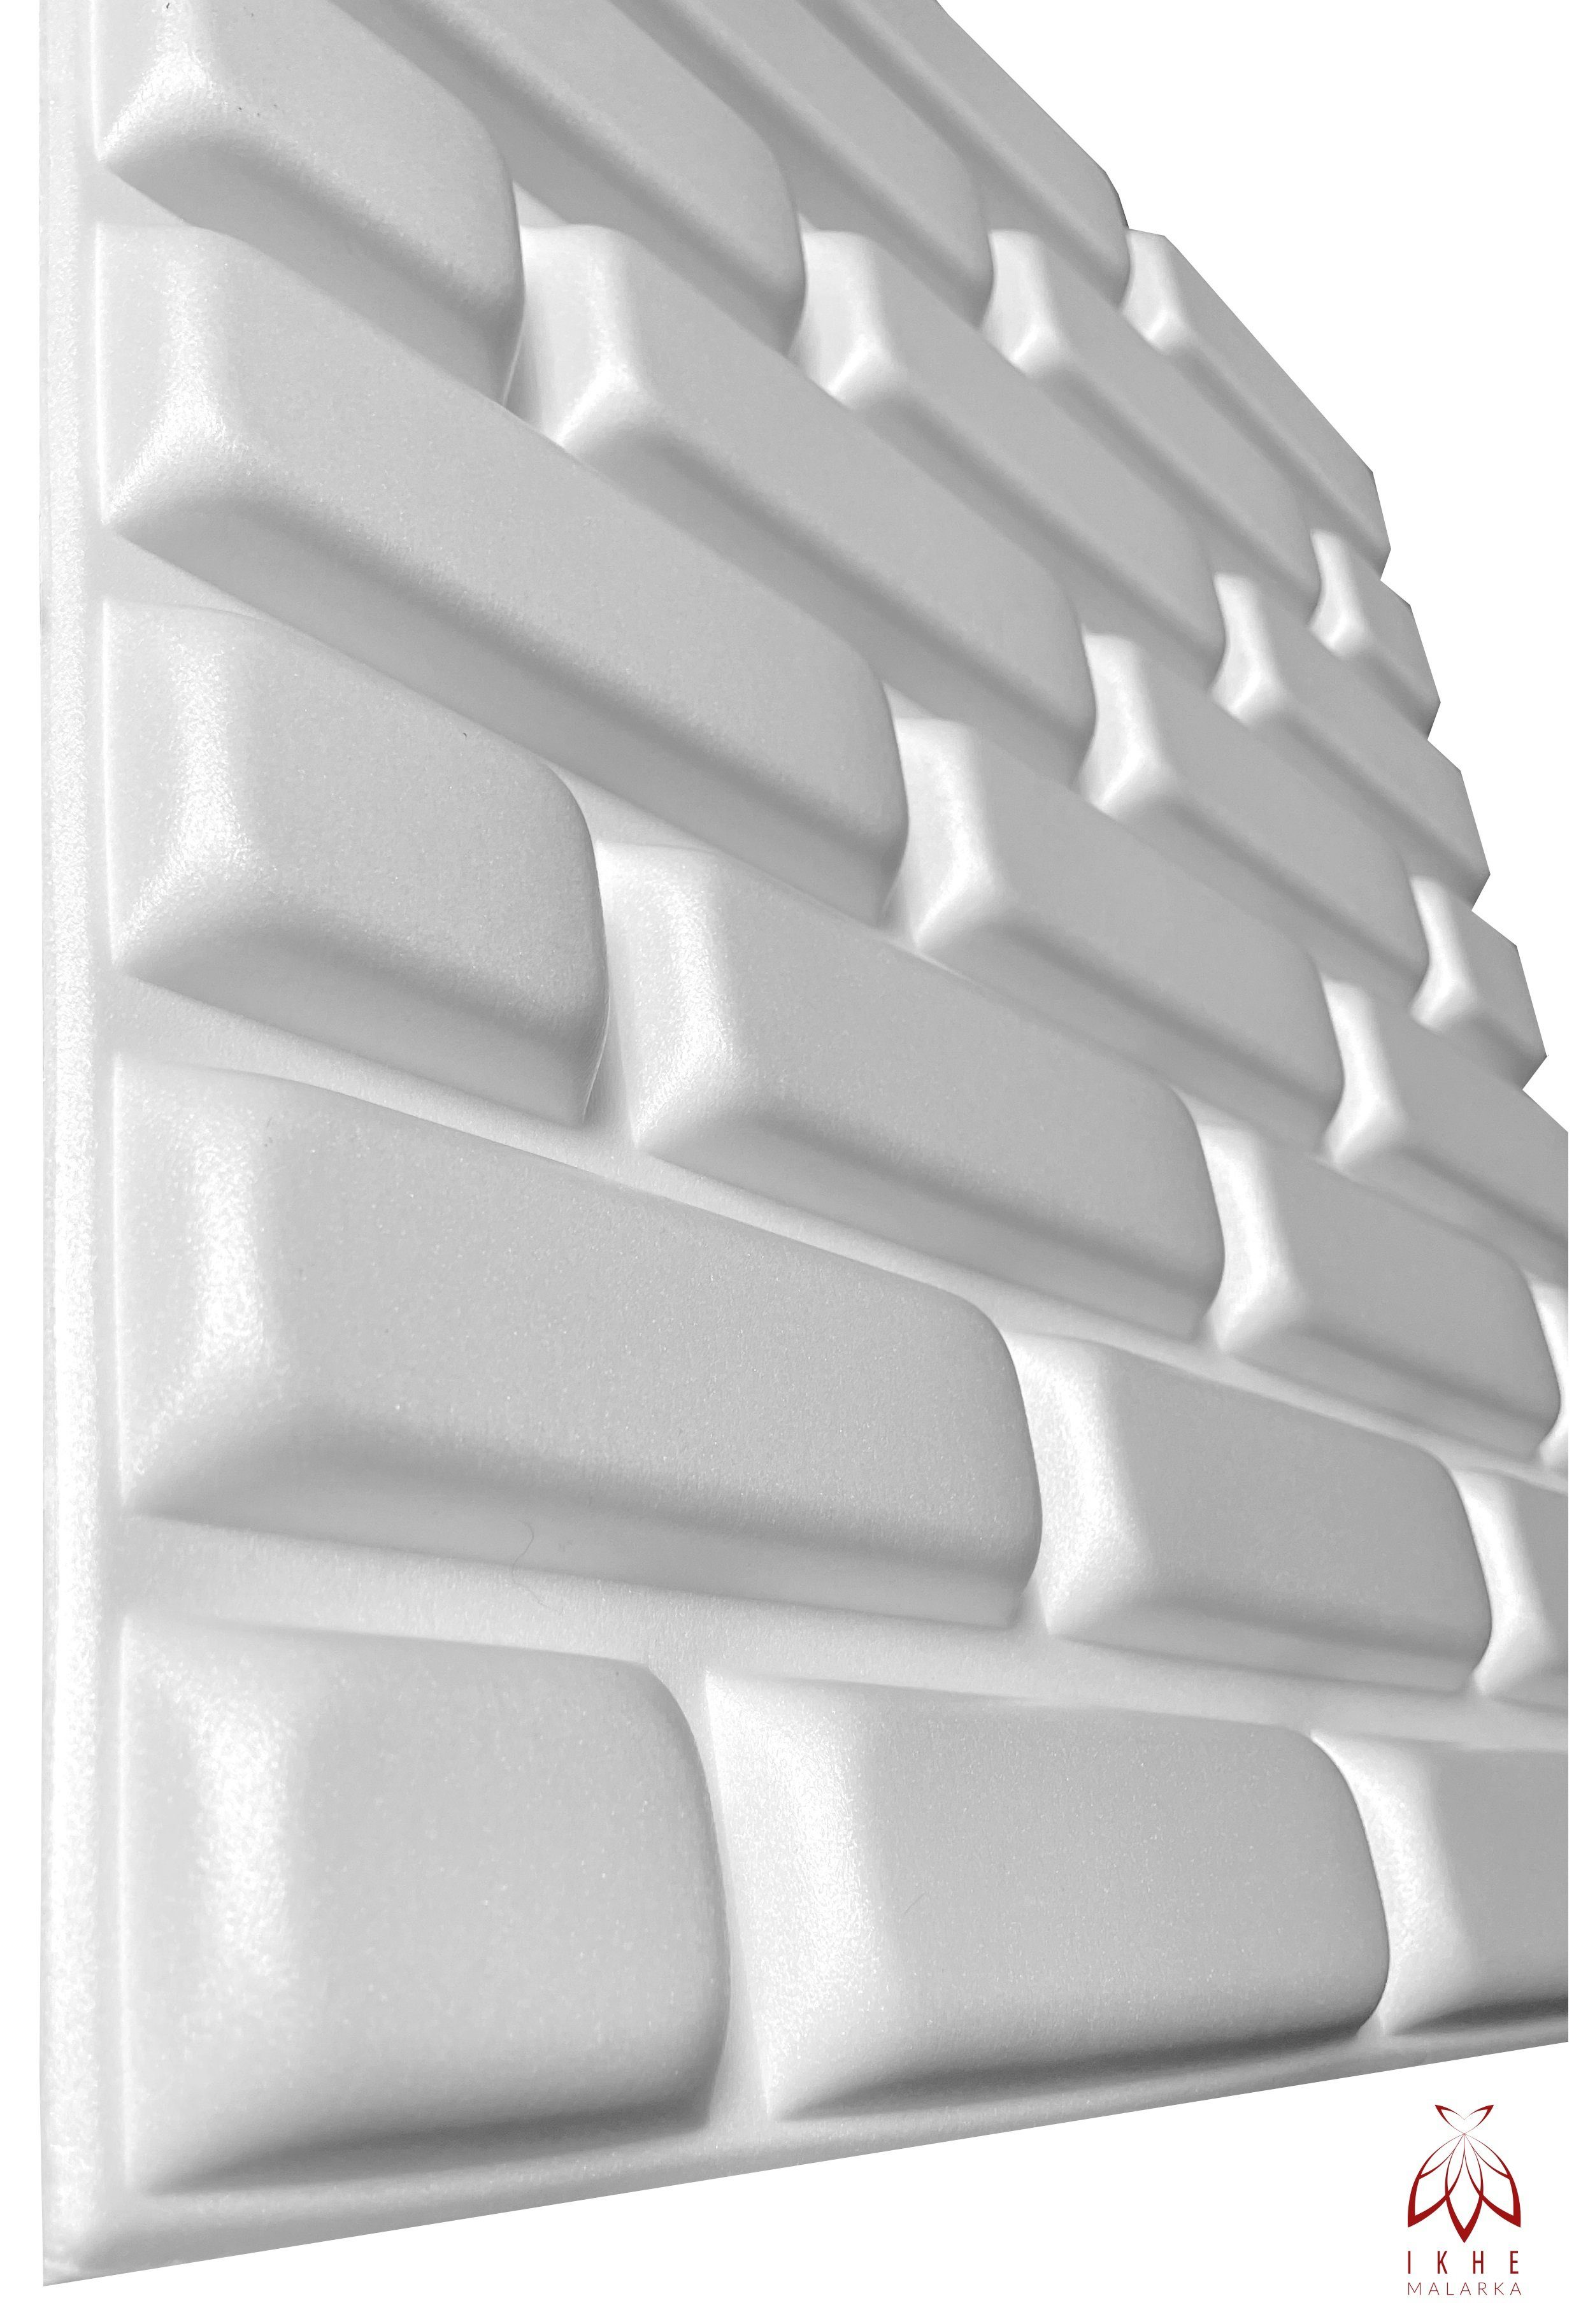 cm, Deckenpaneele Ziegel, Wandpaneel POLYSTYROL IKHEMalarka qm 2m²/8PCS 50,00x50,00 0,50 3D Wandpaneele White BxL: